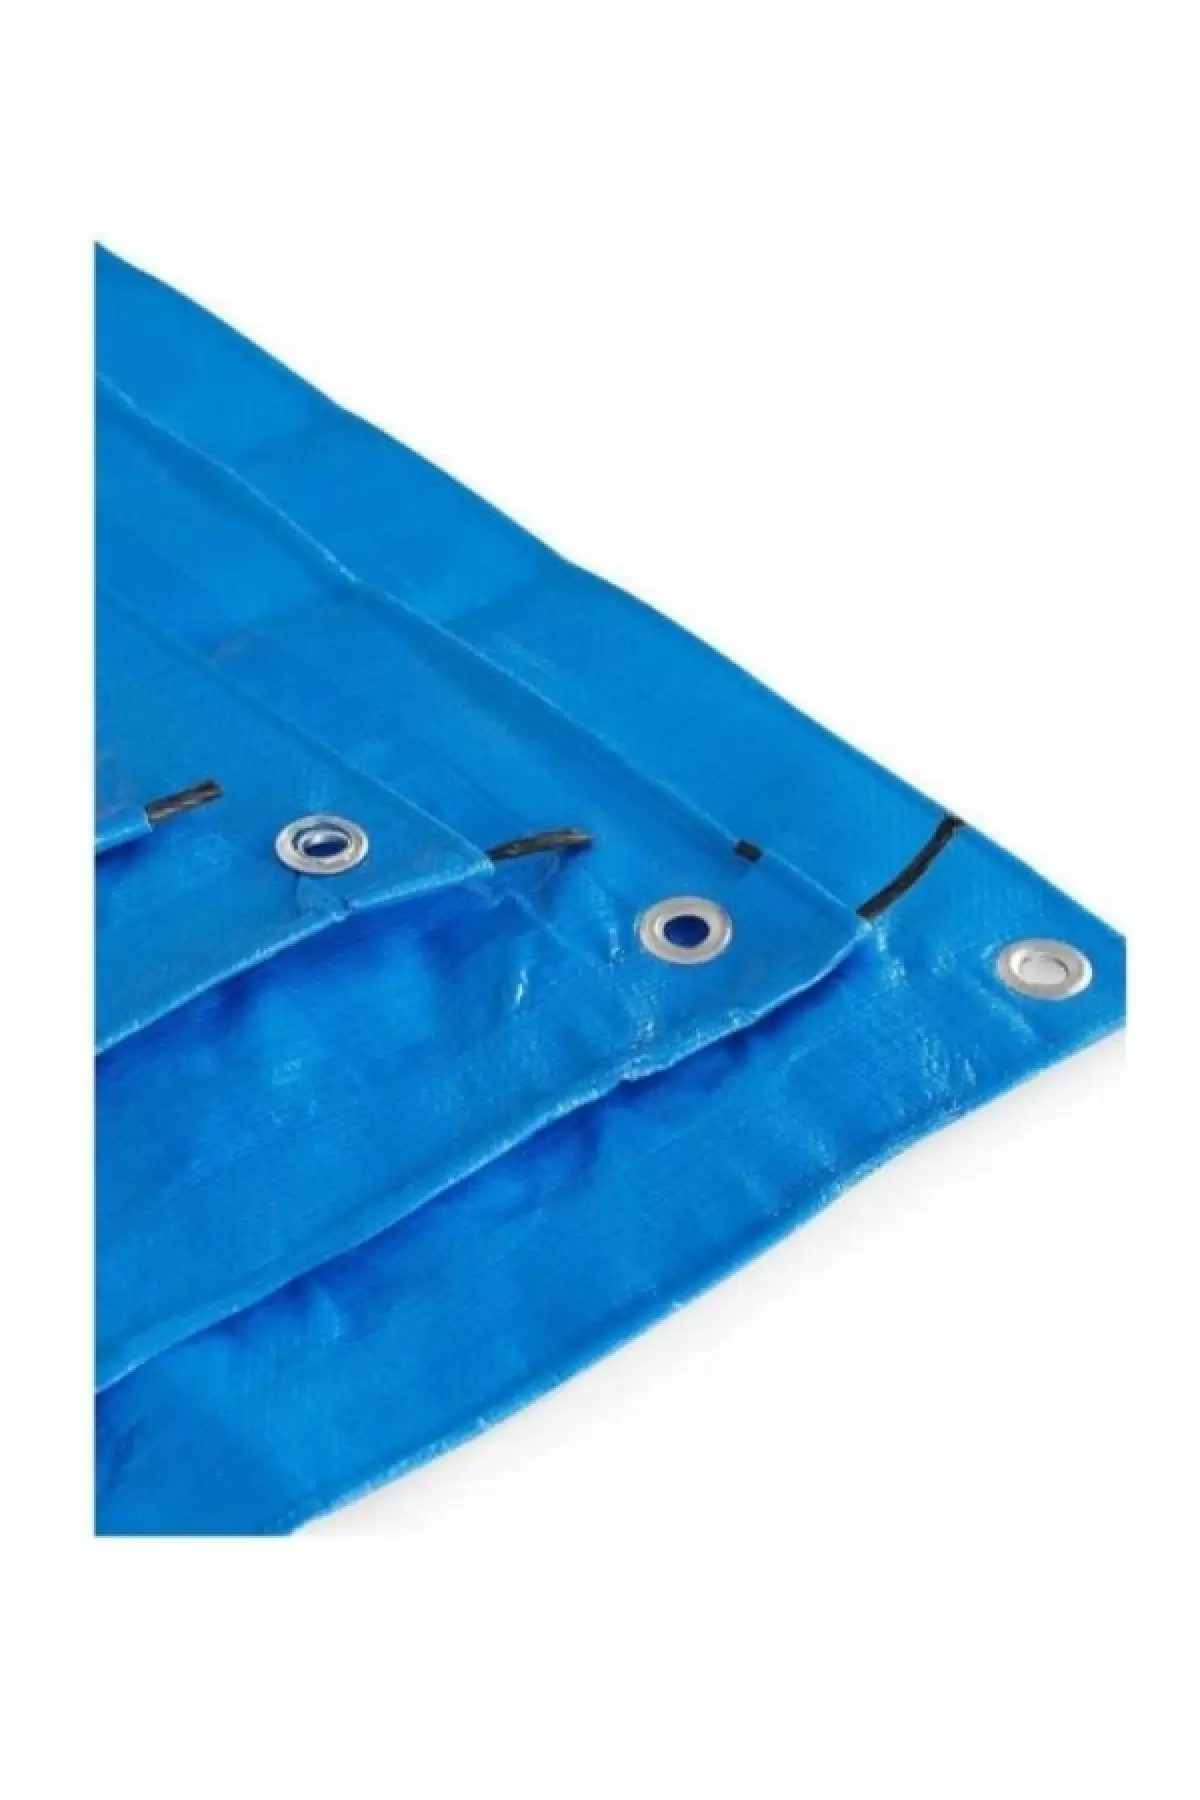 Su Geçirmez PVC-Parafin Gölgelik Çadır-Tente-Branda Mavi 8x10 m